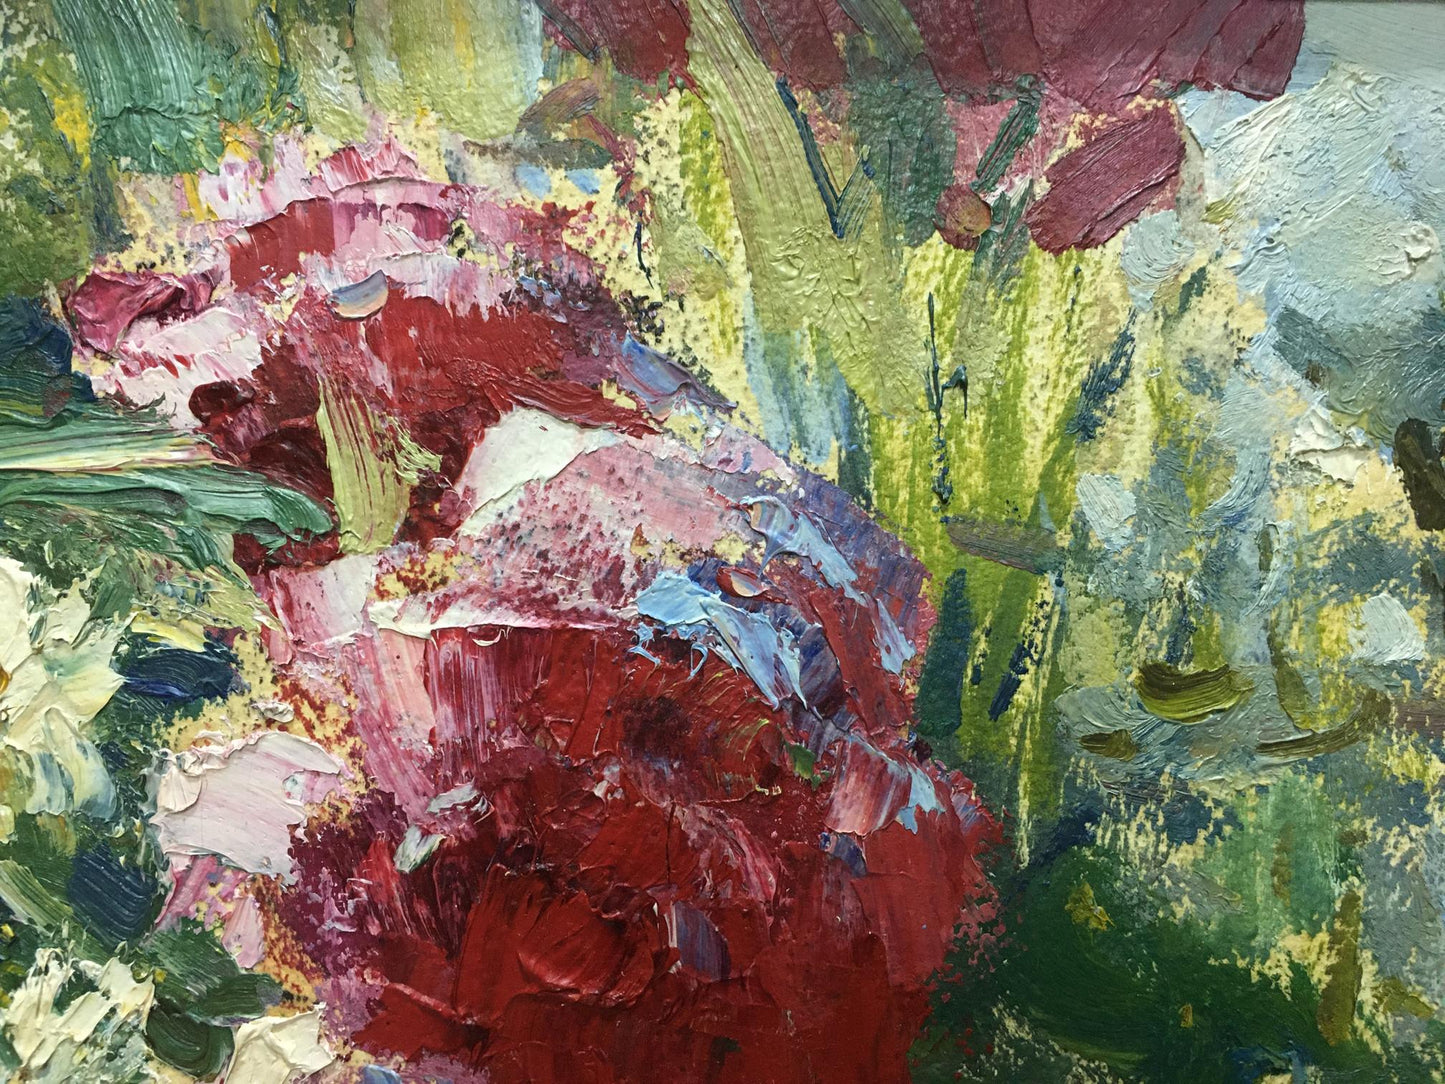 Oil painting Flowers Petr Volsky